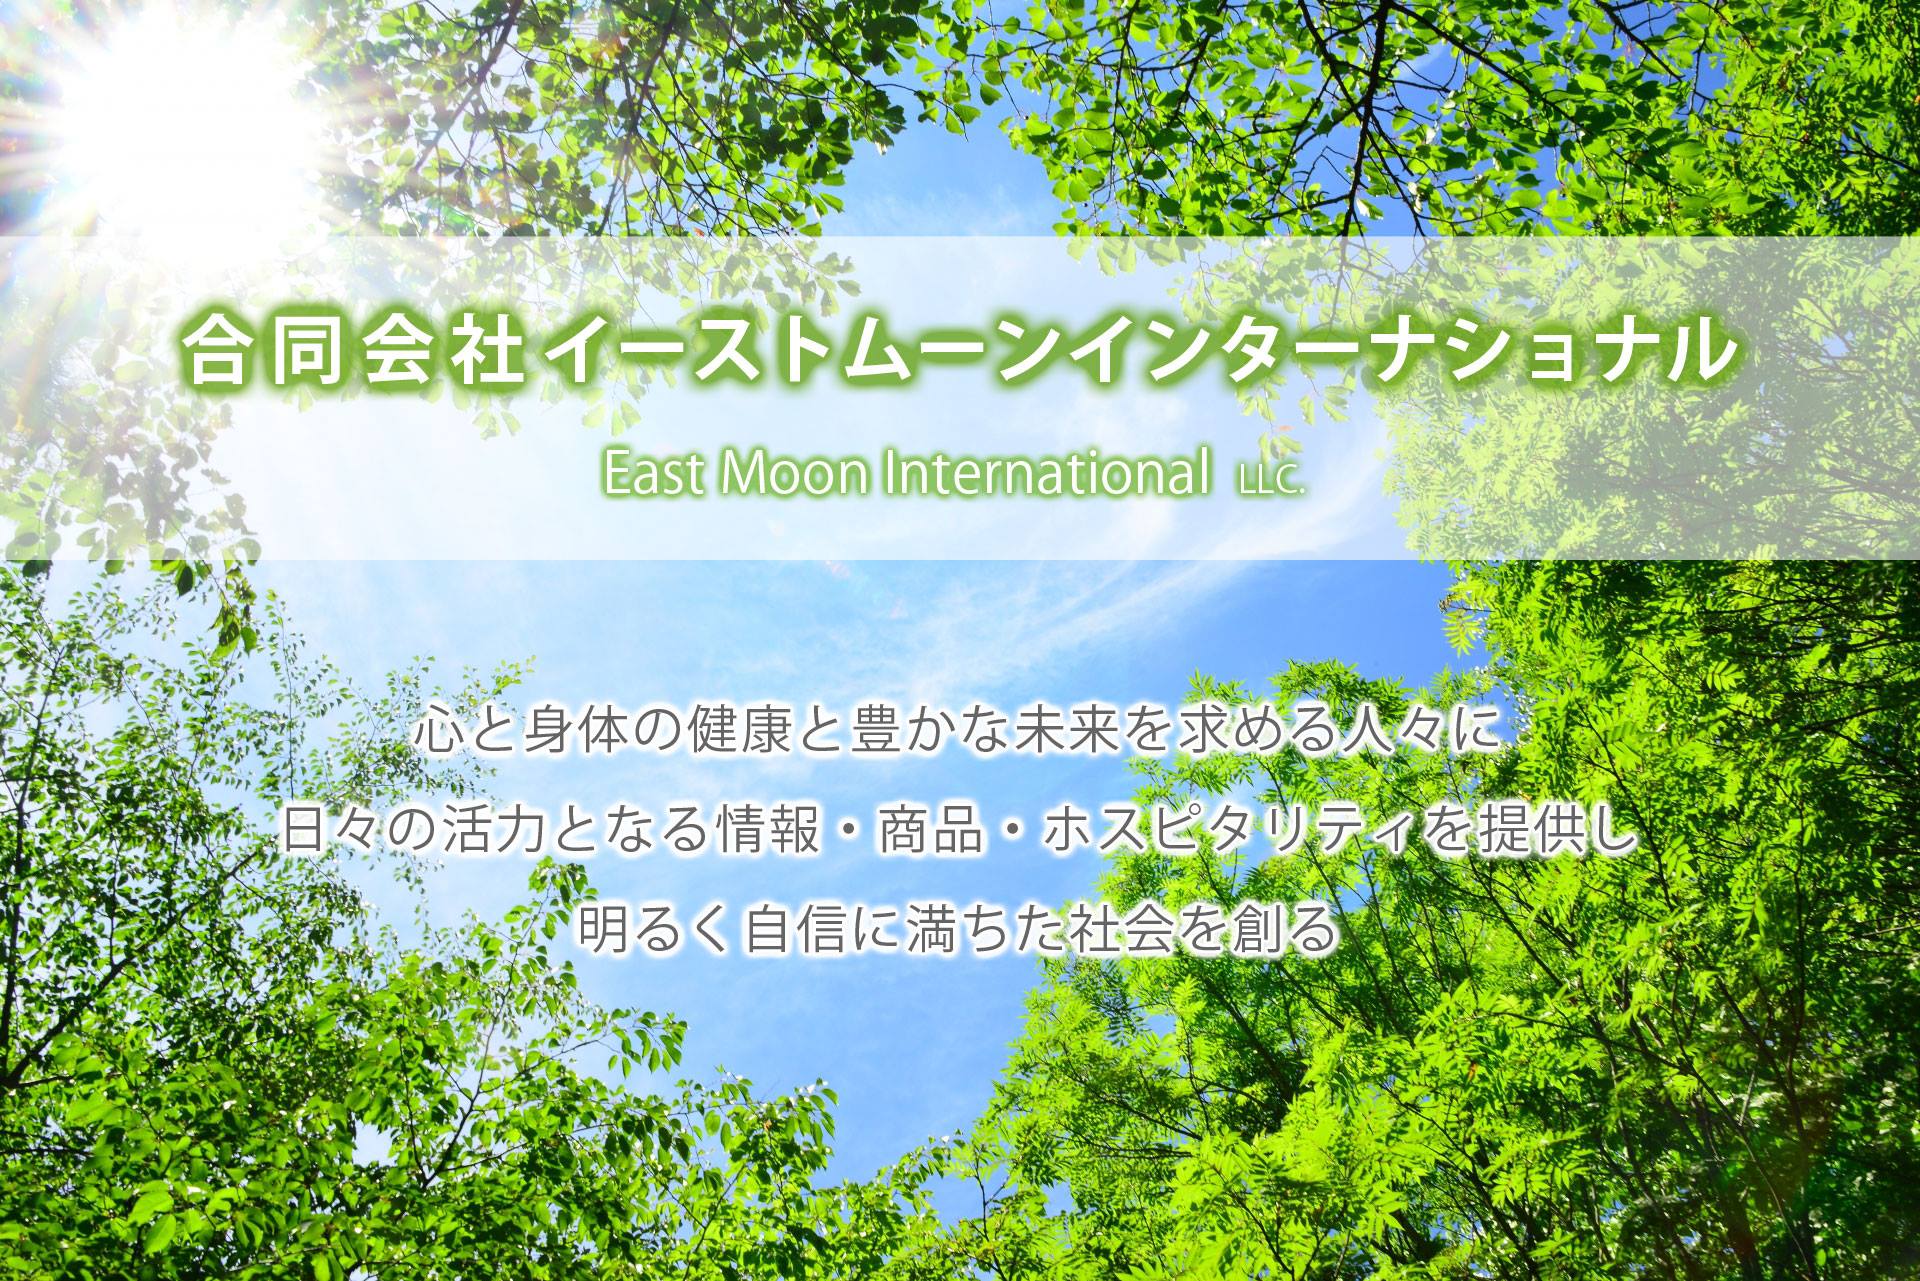 Make a beautiful life<br>合同会社イーストムーンインターナショナル<br>https://www.eastmoon-intl.jp